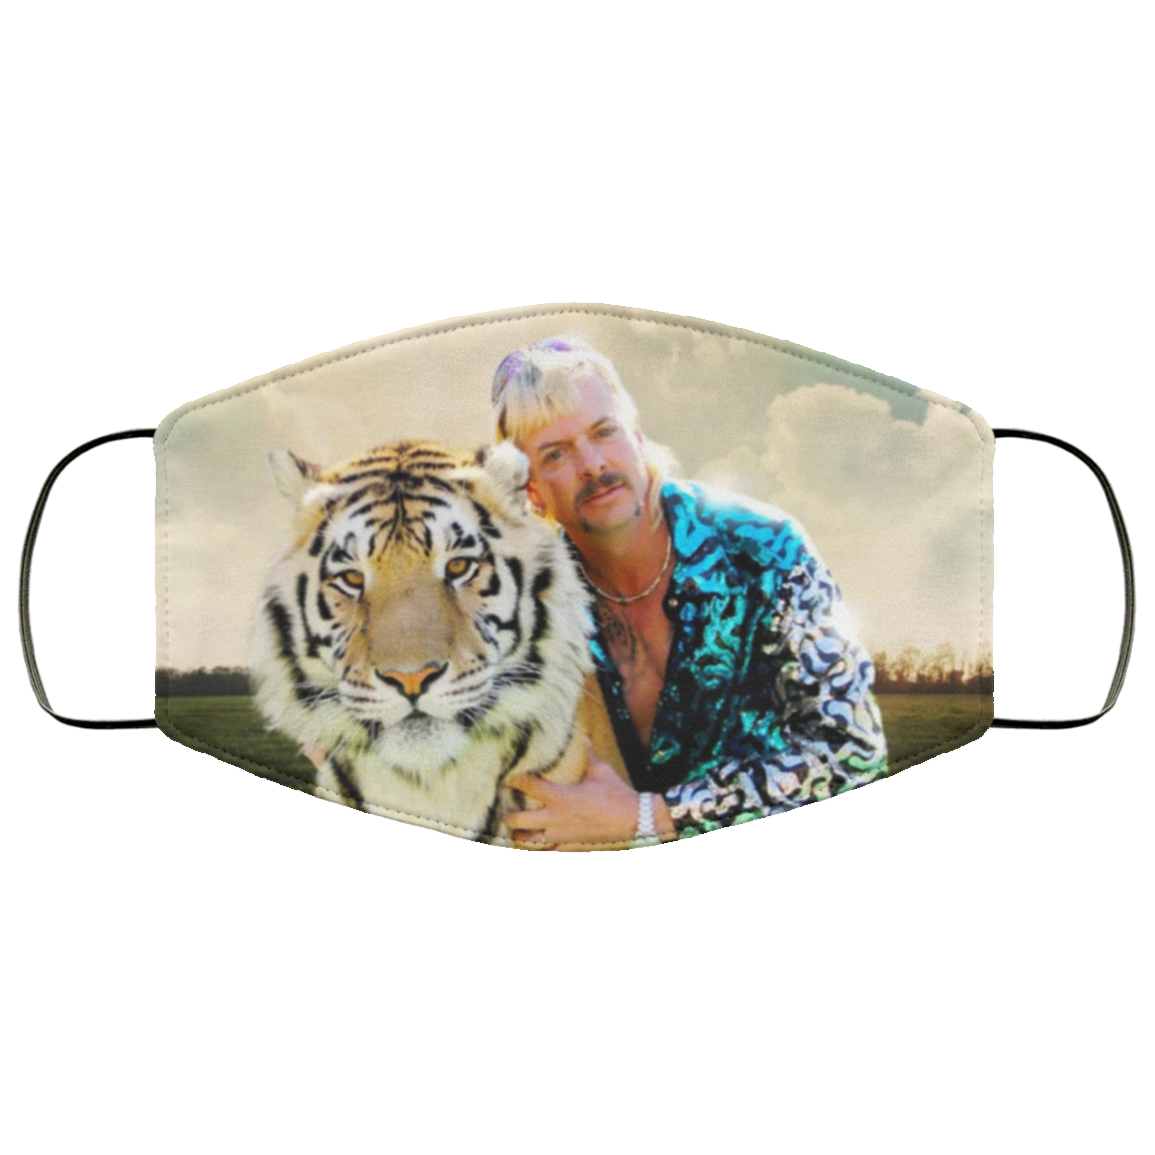 Tiger Mask PNG HD Quality